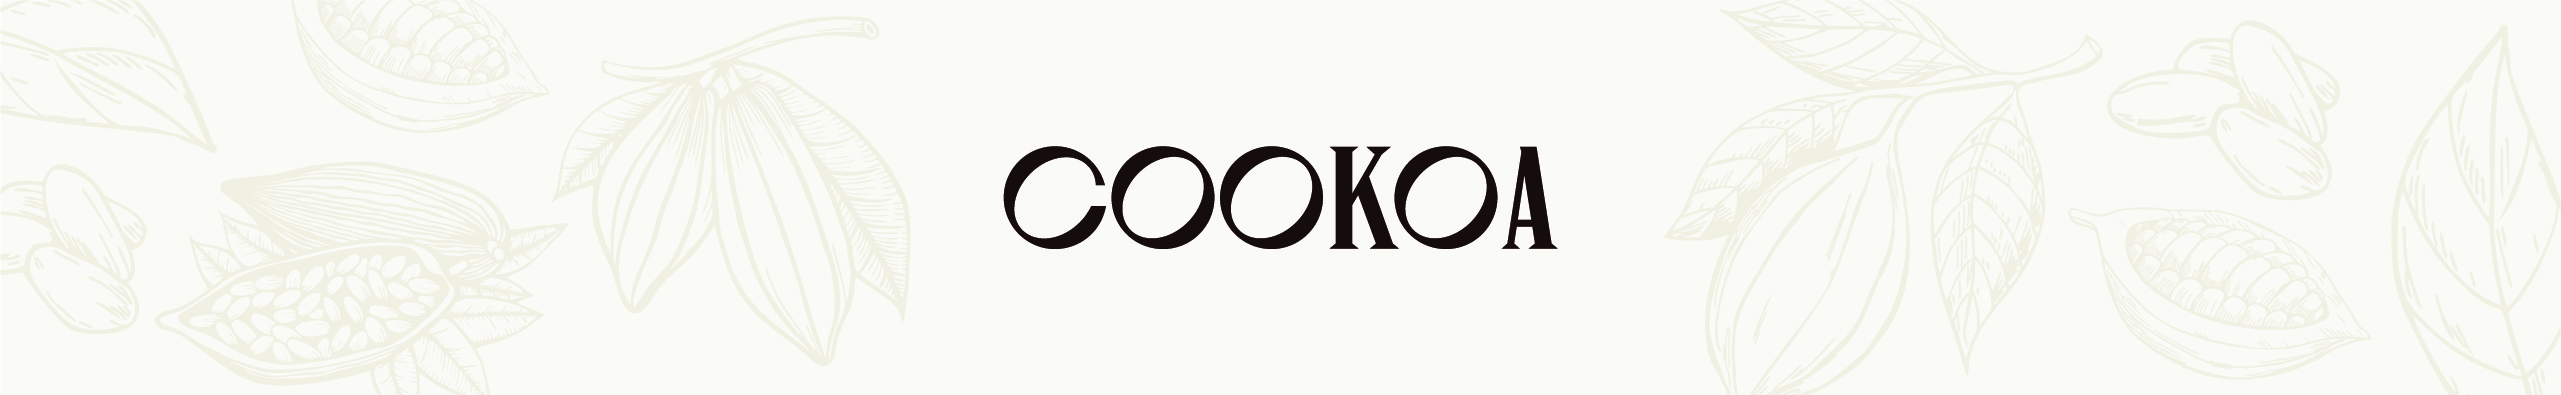 Cookoa